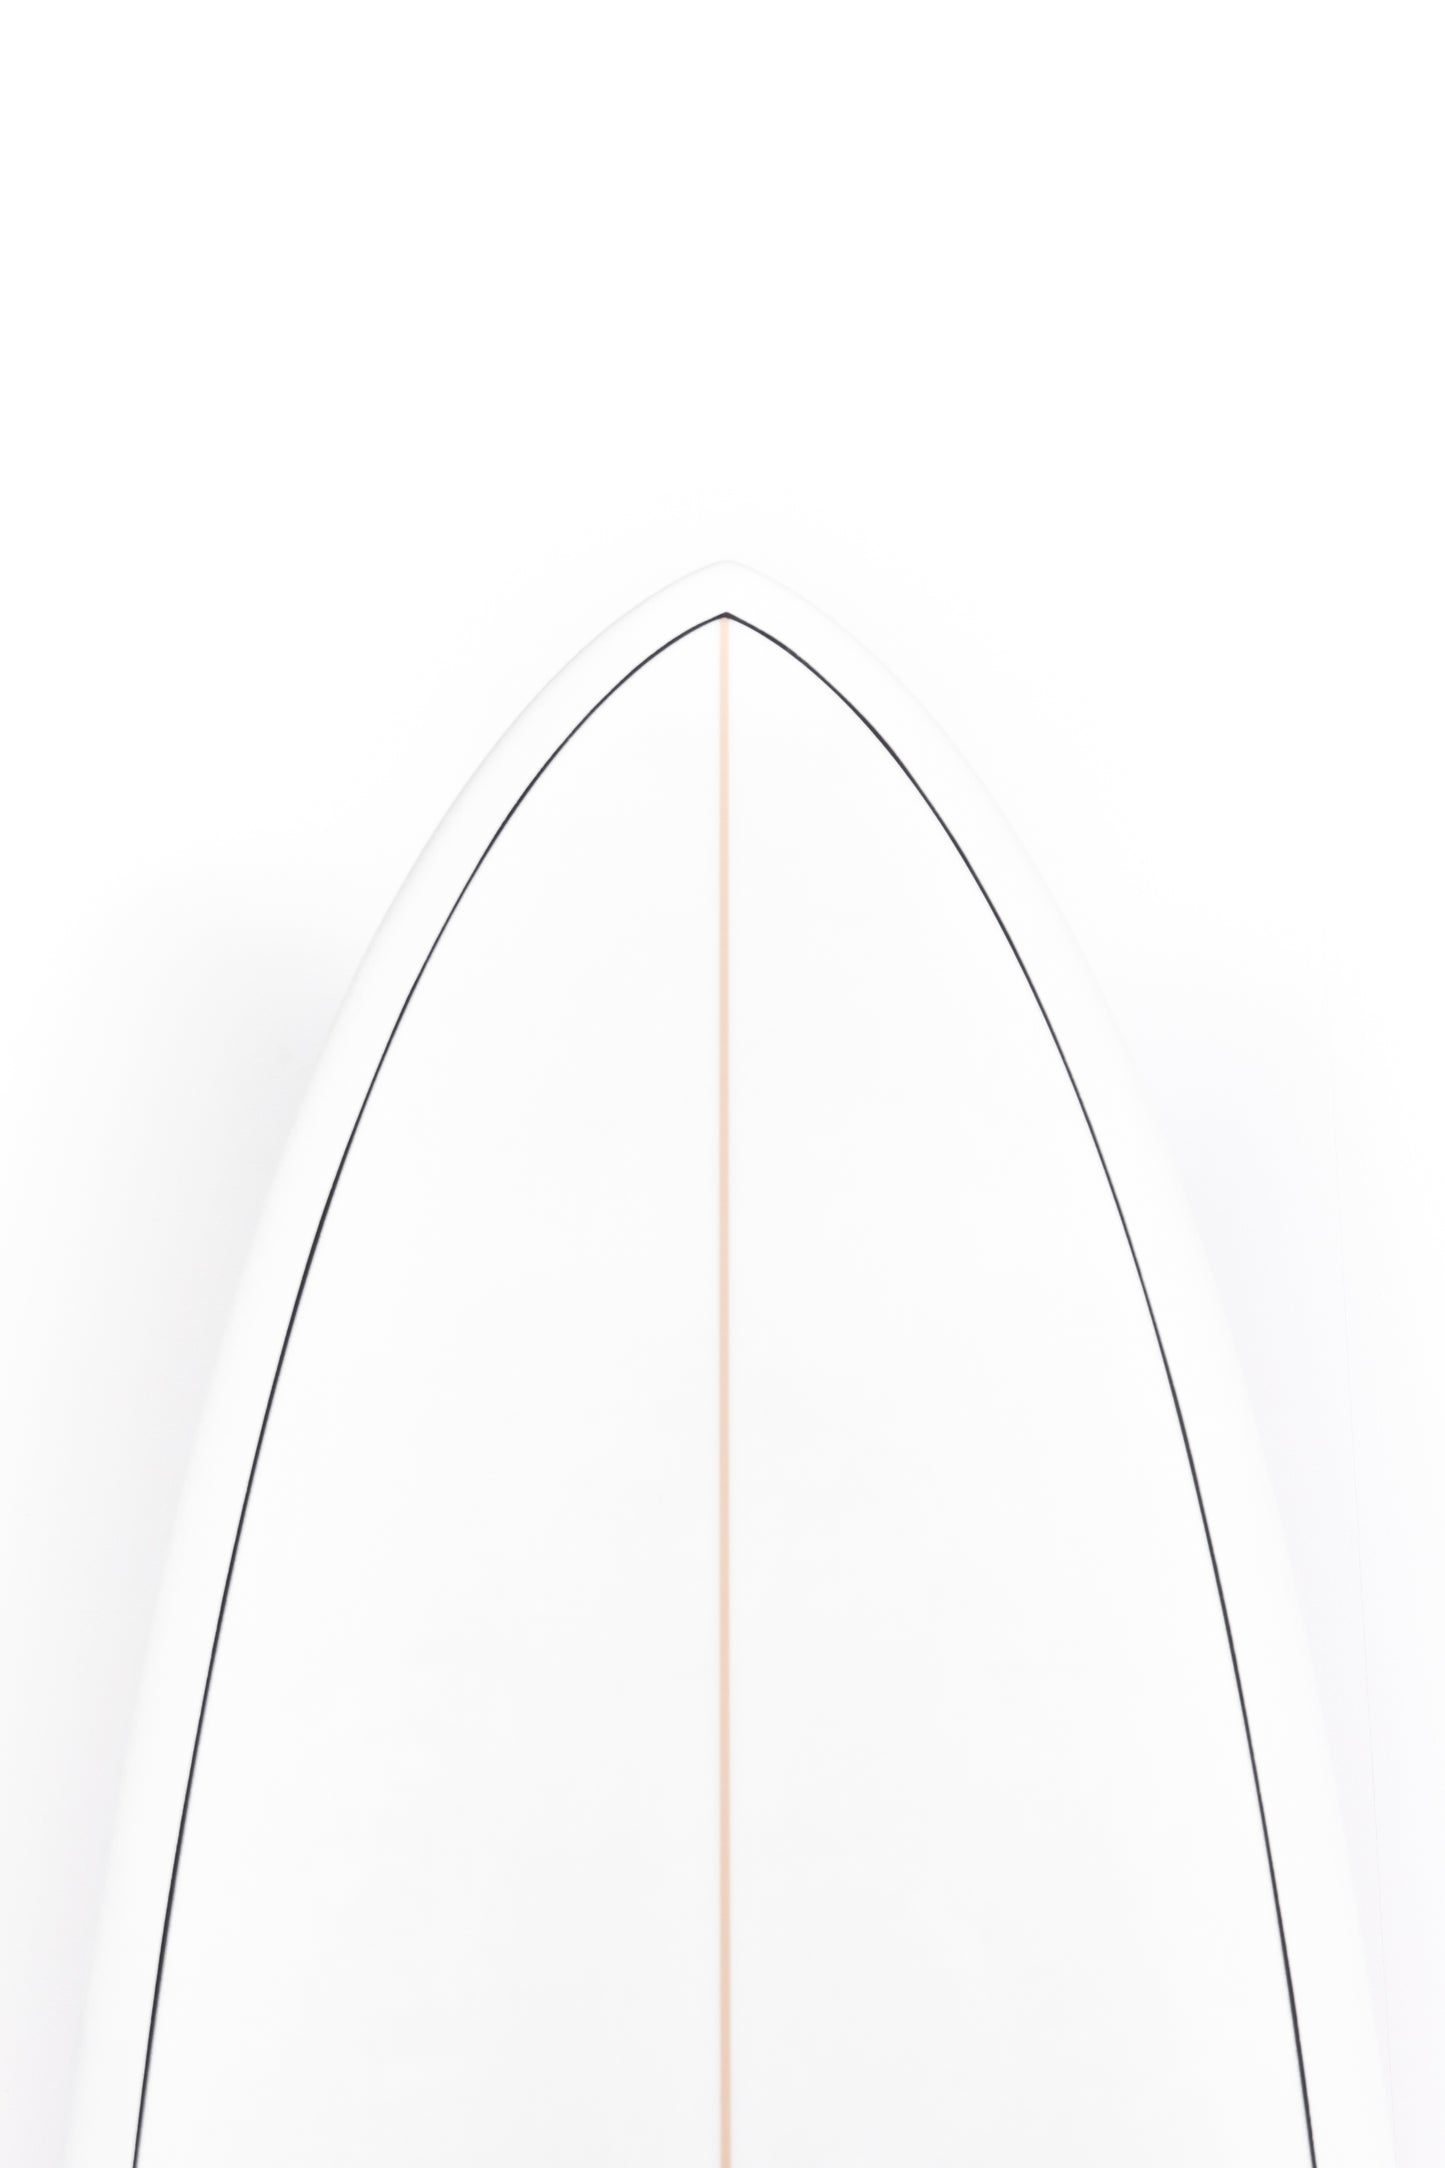 
                  
                    Pukas Surf Shop - Torq Surfboards - MODFISH - 6'10" x 21 3/4 x 2 3/4 - 46L
                  
                